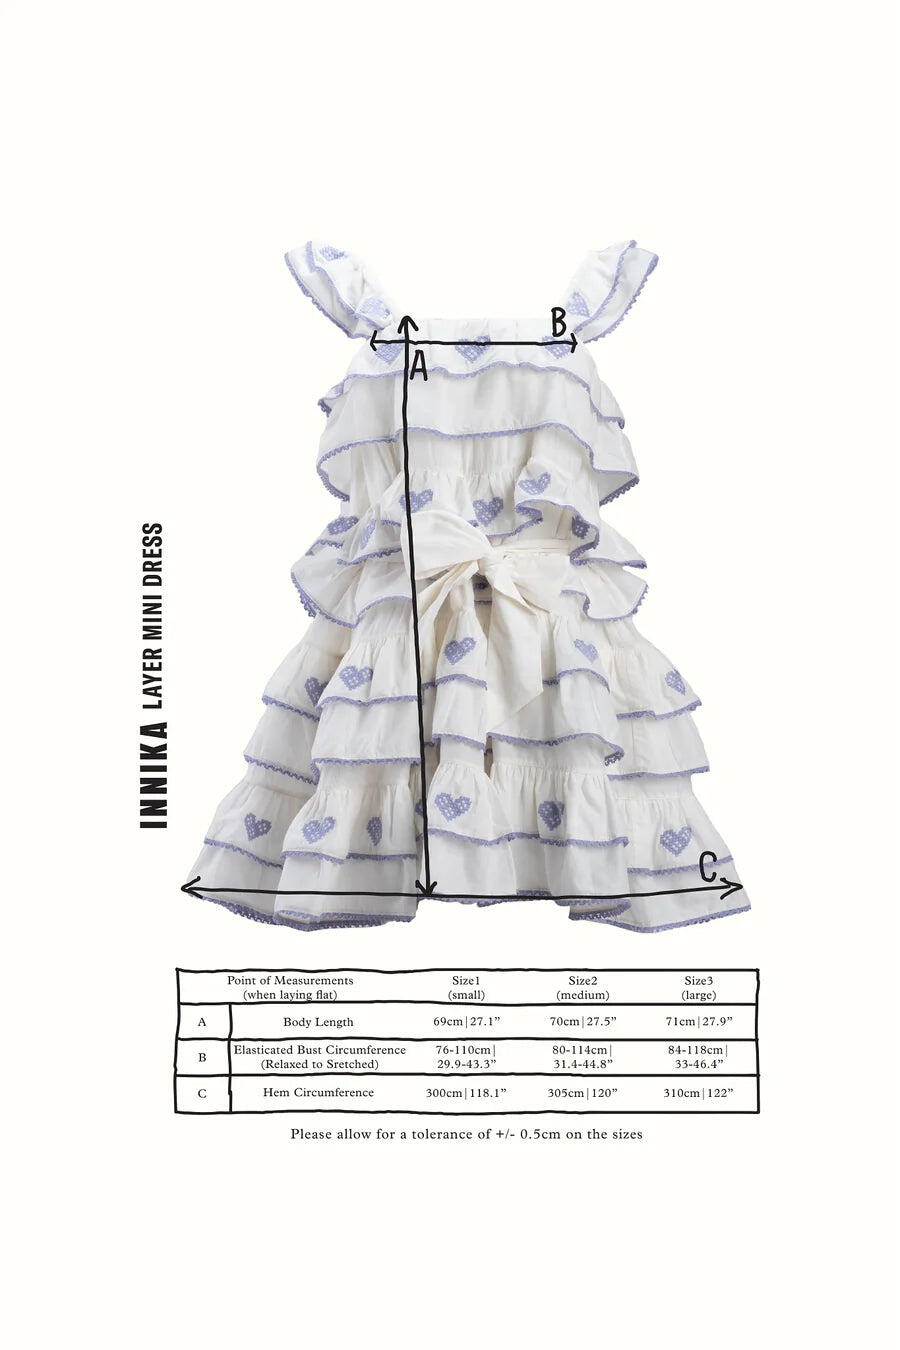 Size Guide of Mini Dress